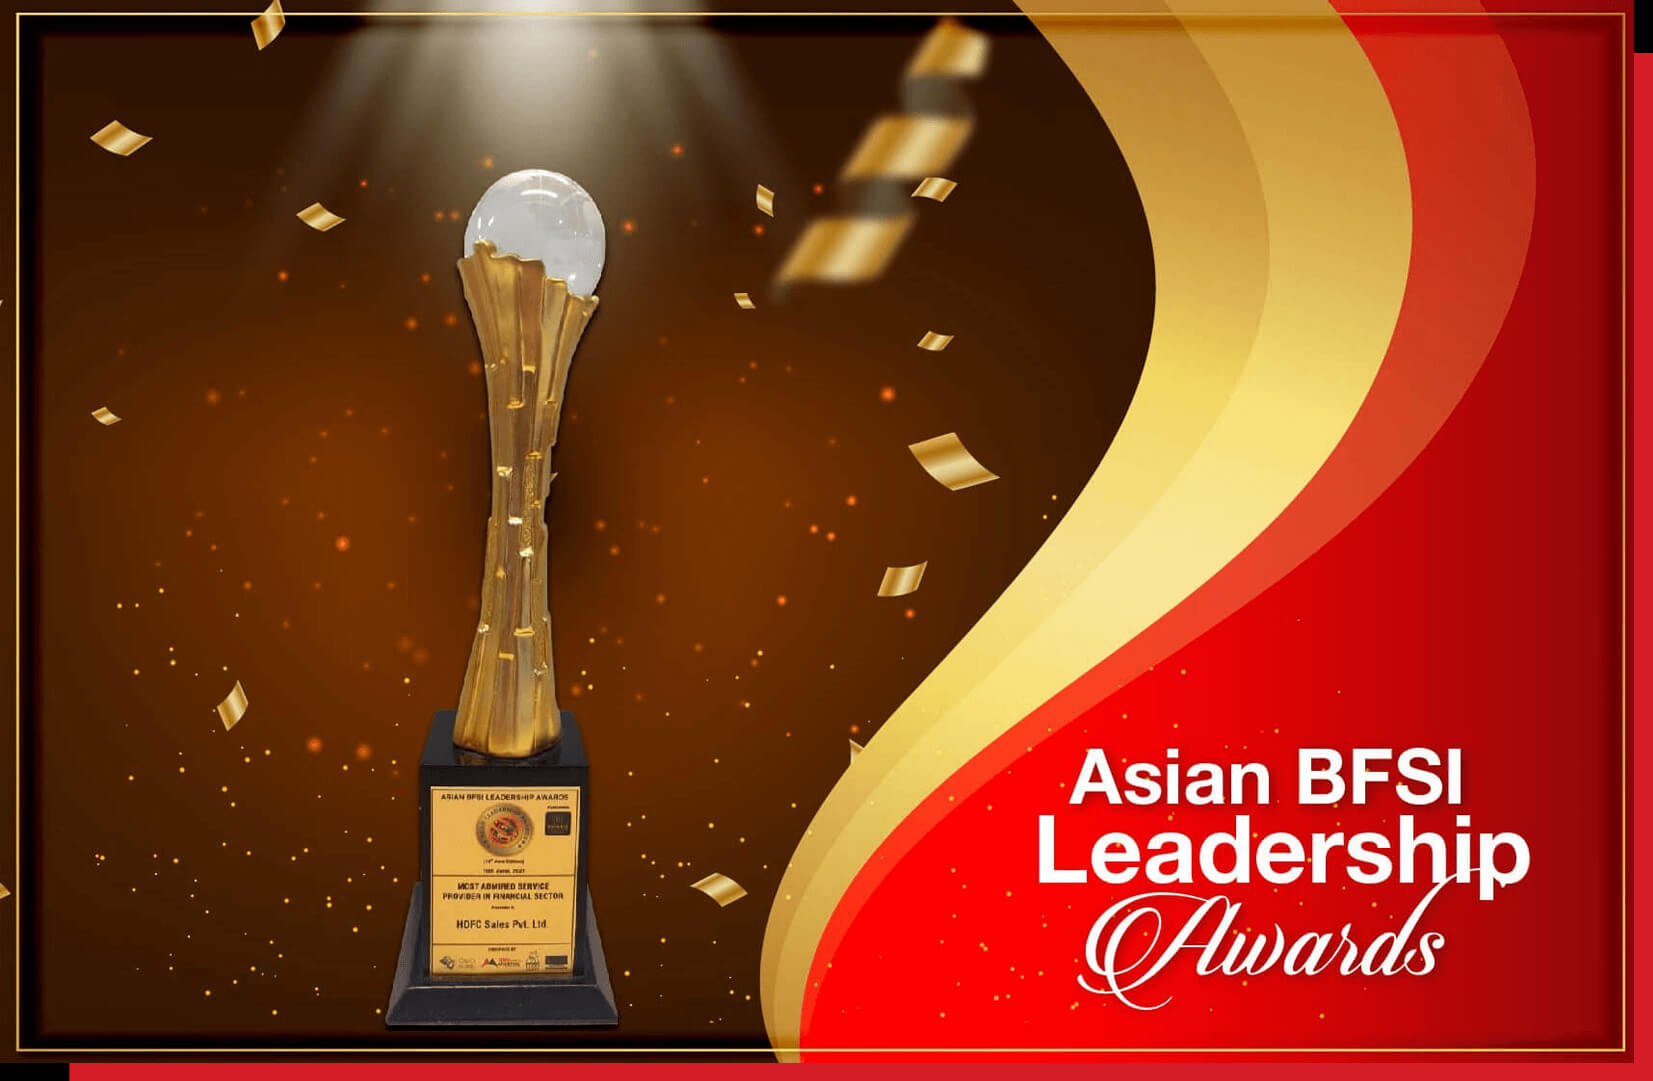 Asian BFSI leadership awards